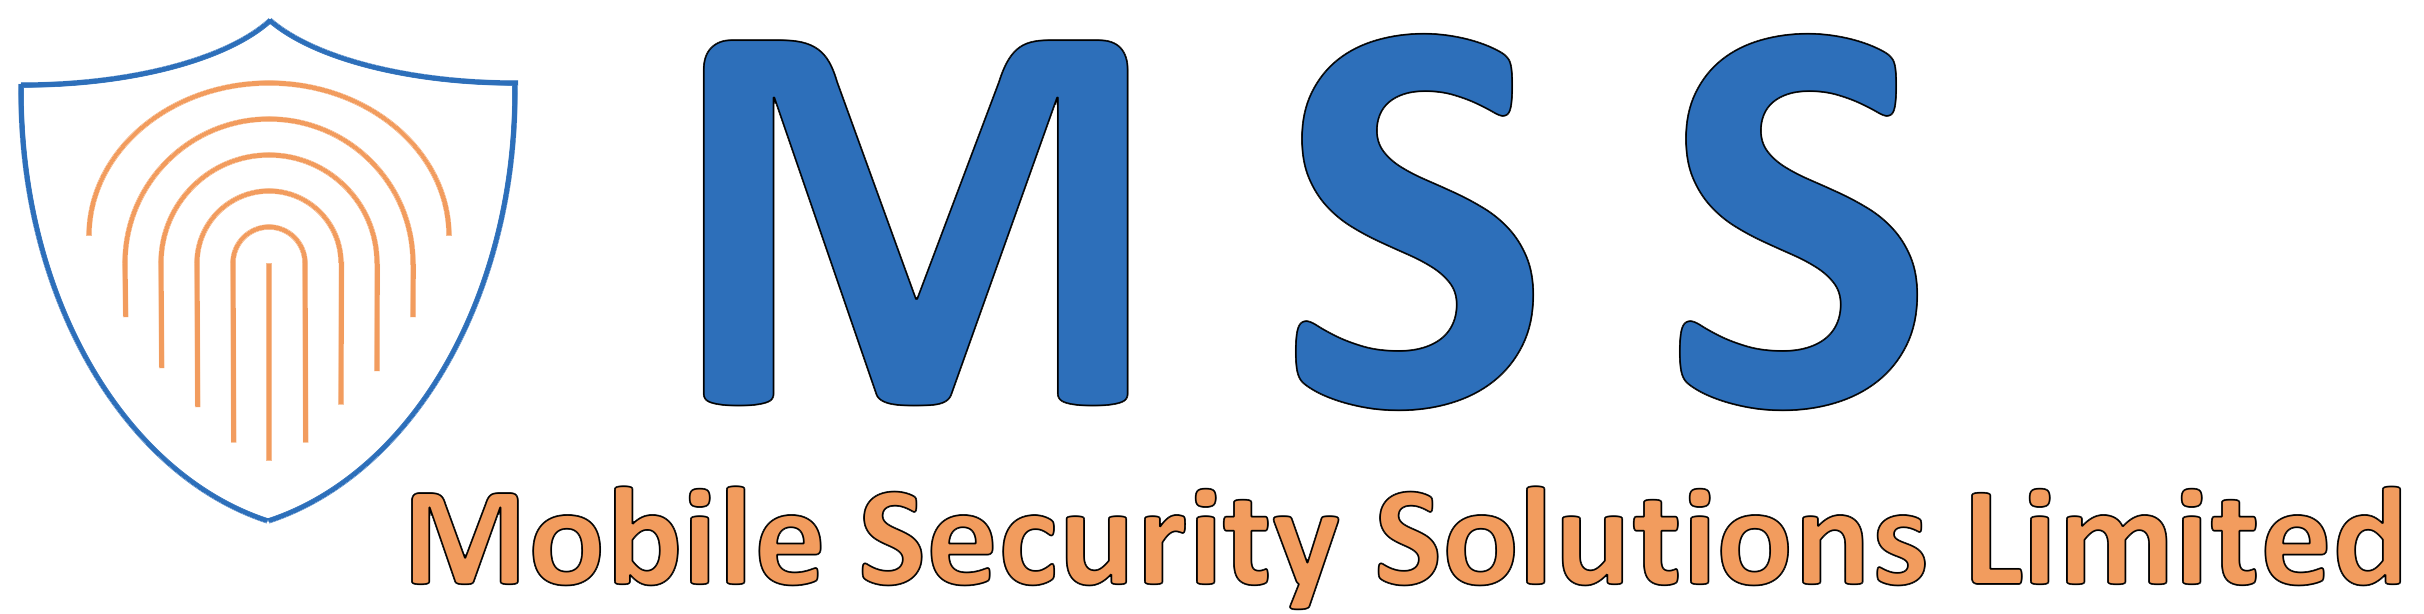 mss logo